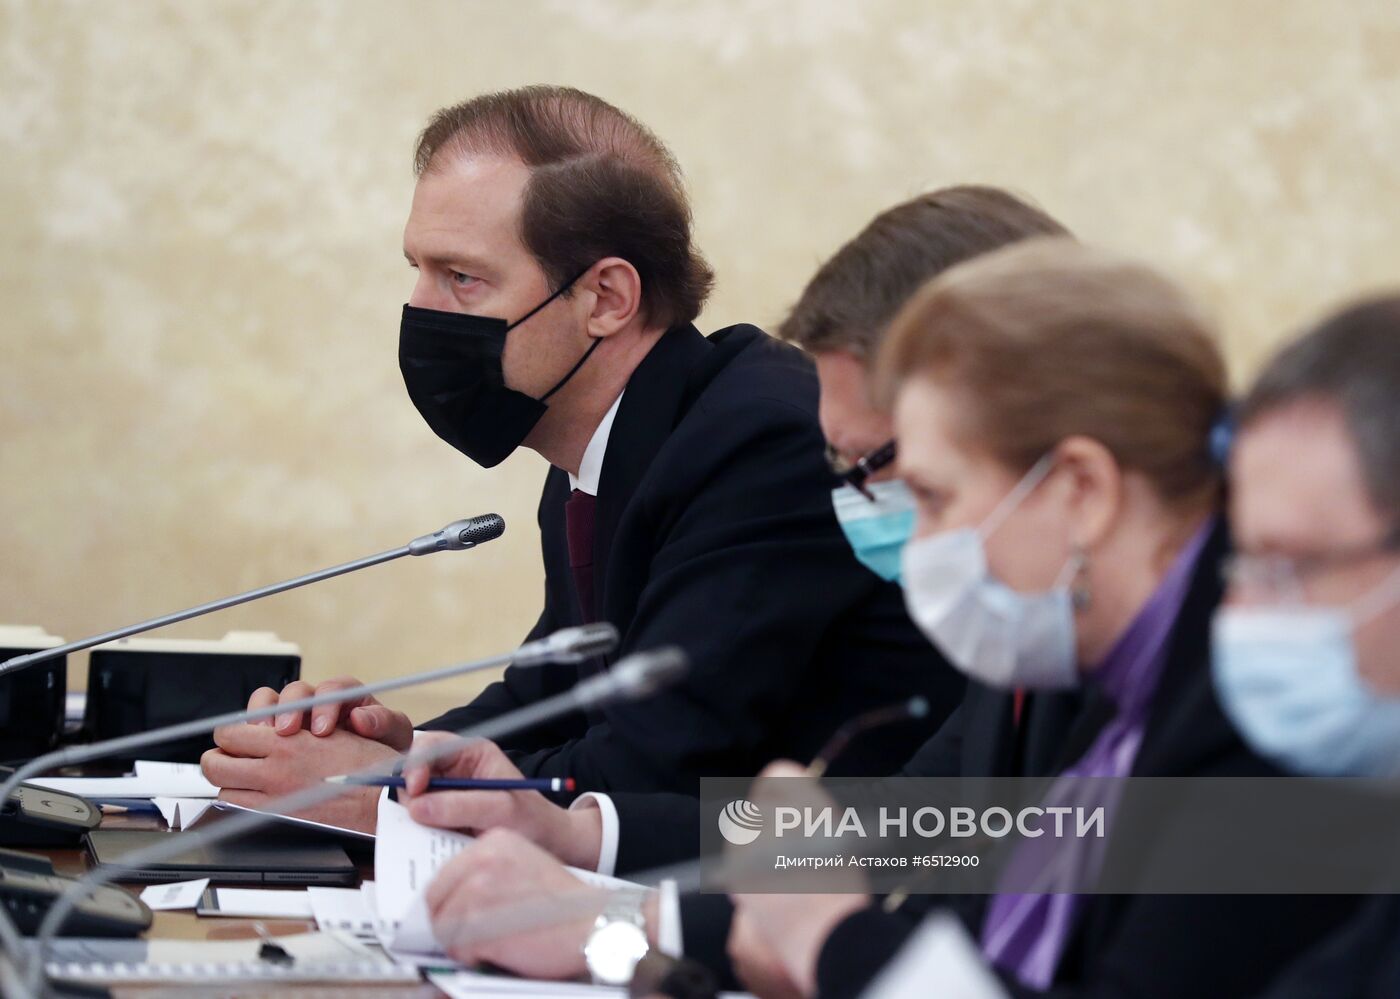 Премьер-министр РФ М. Мишустин провел совещание по вопросам производства и обращения вакцин от COVID-19